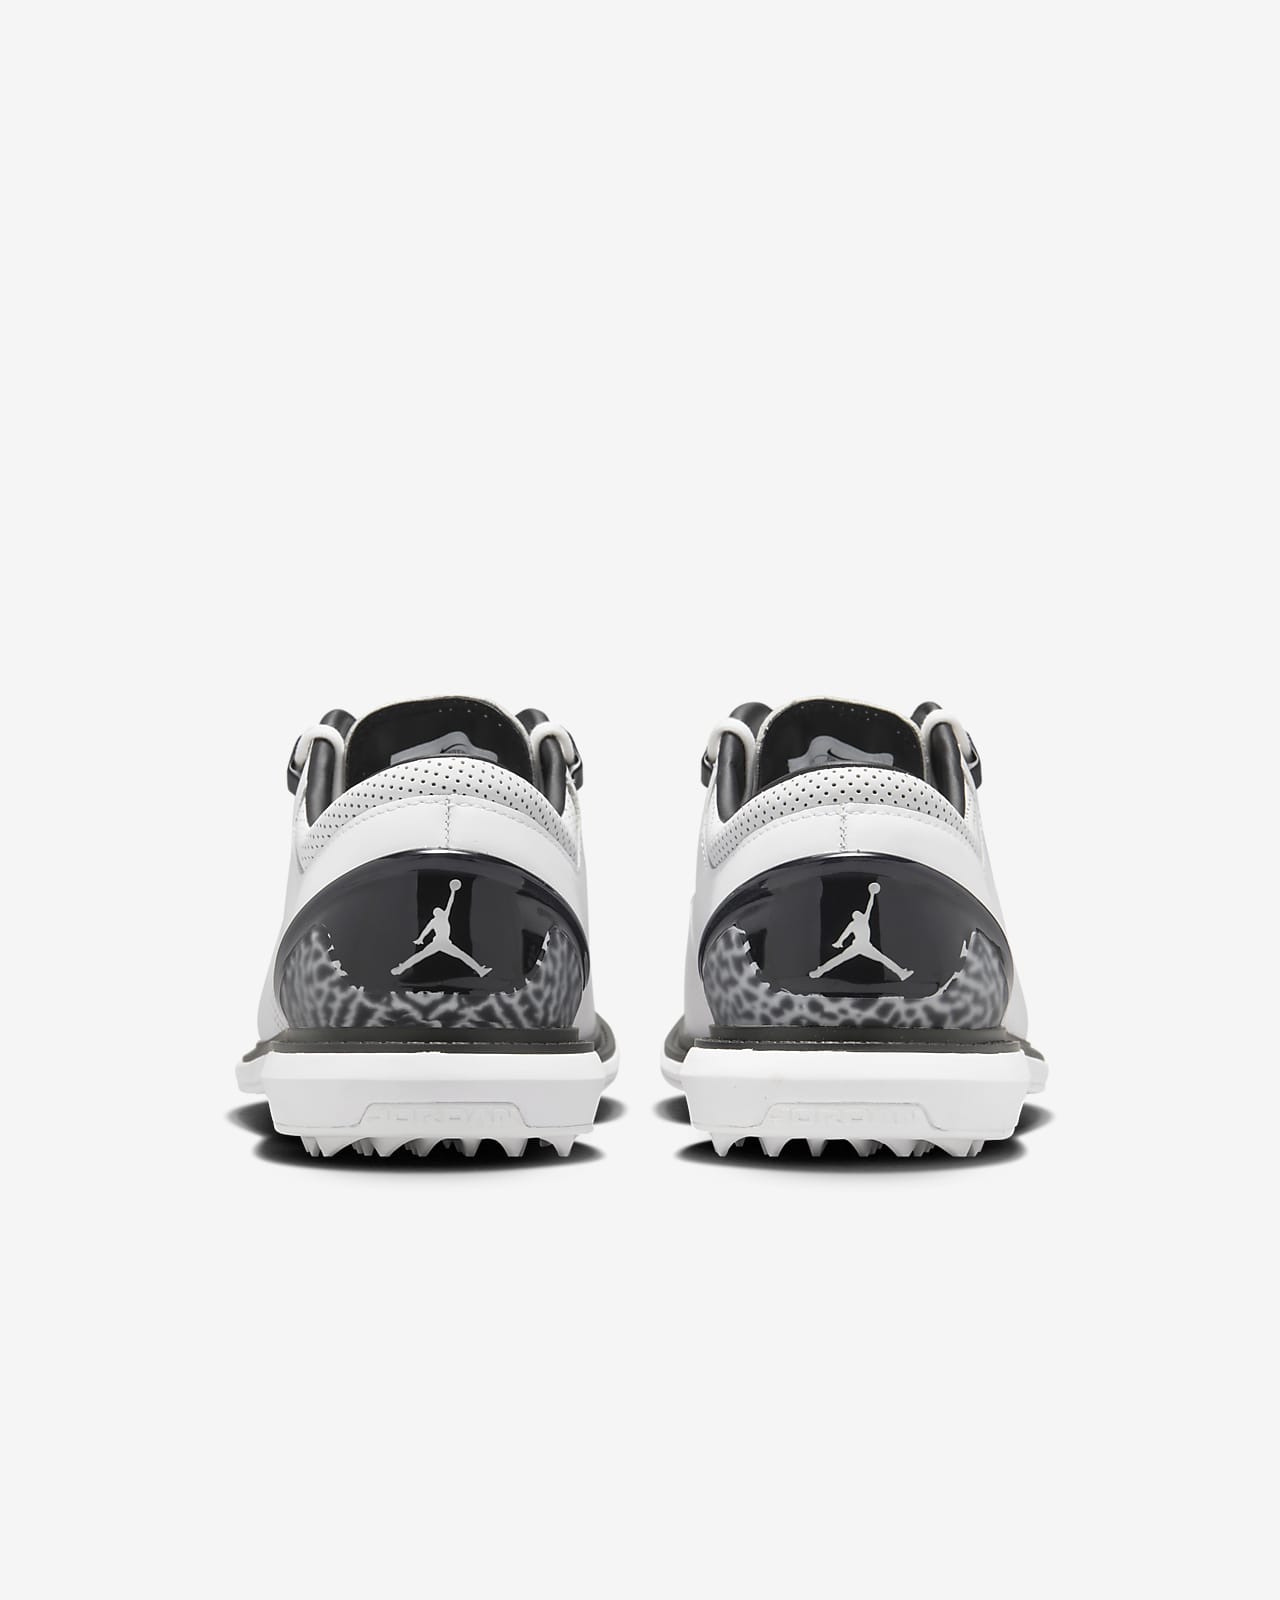 Jordan 4 Zapatillas de golf - Hombre. Nike